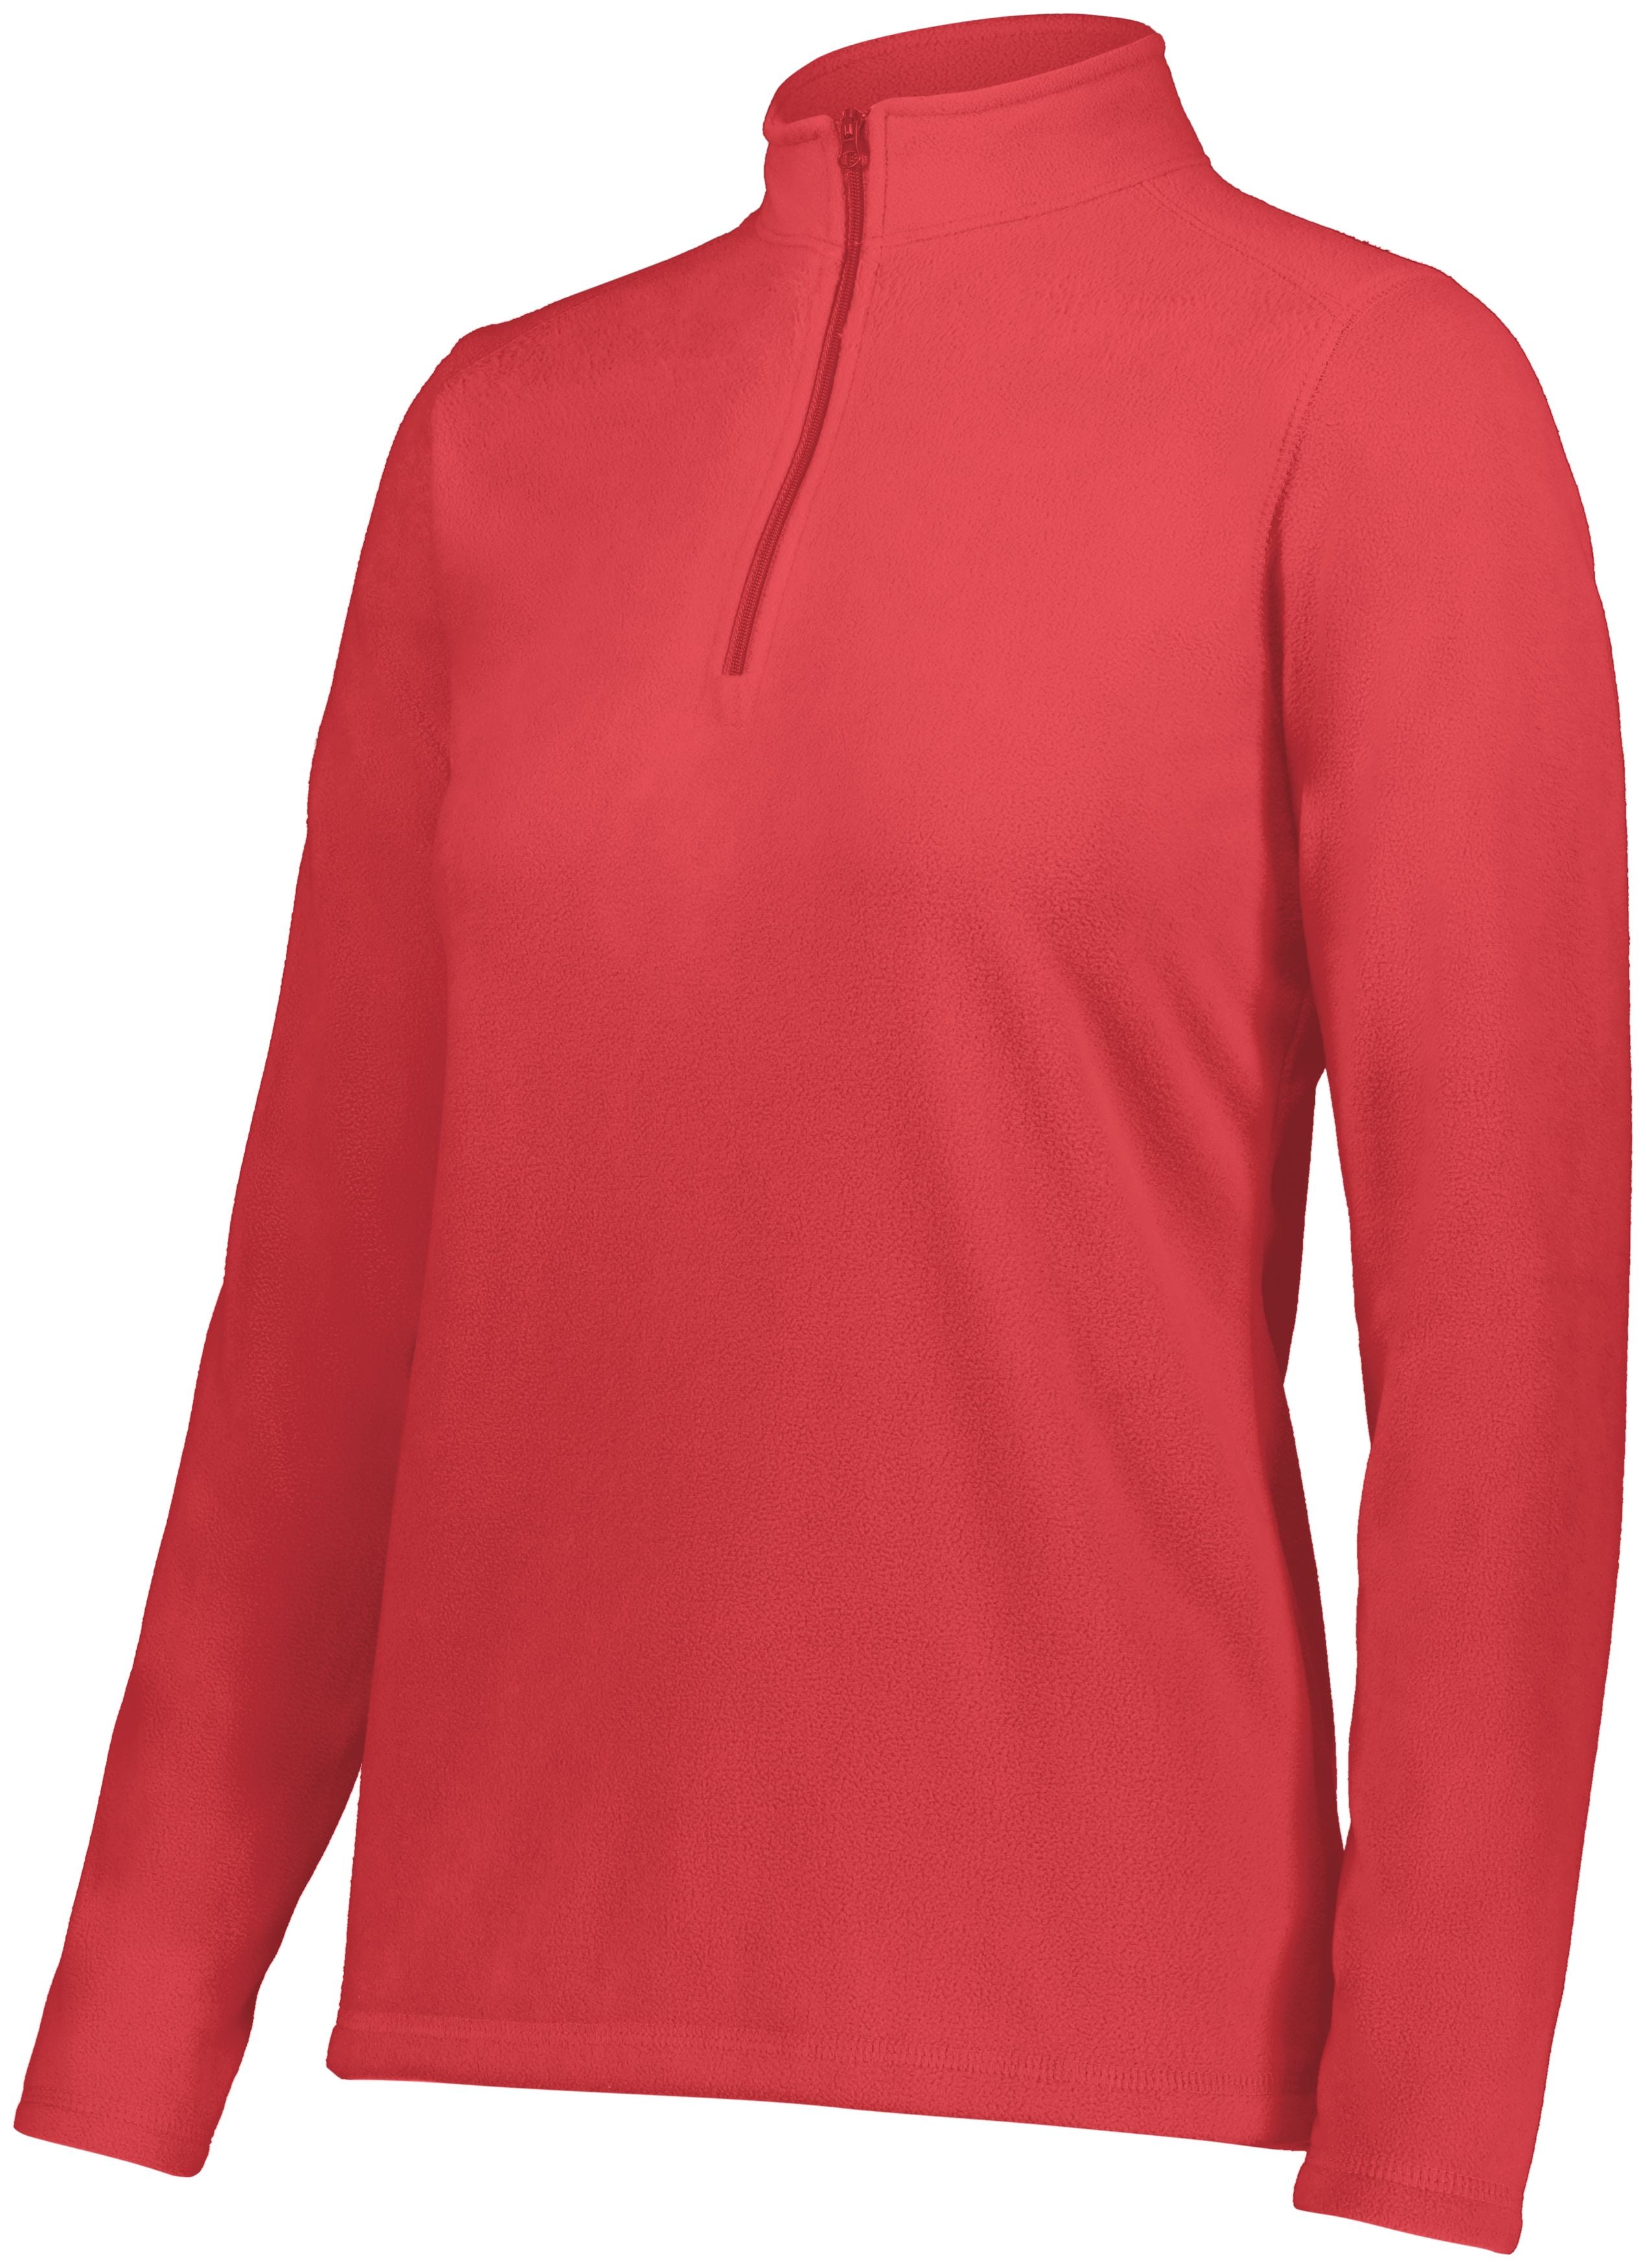 I2) 6864 Augusta Ladies Micro-Lite Fleece 1/4 Zip Pullover - SHEARCORE